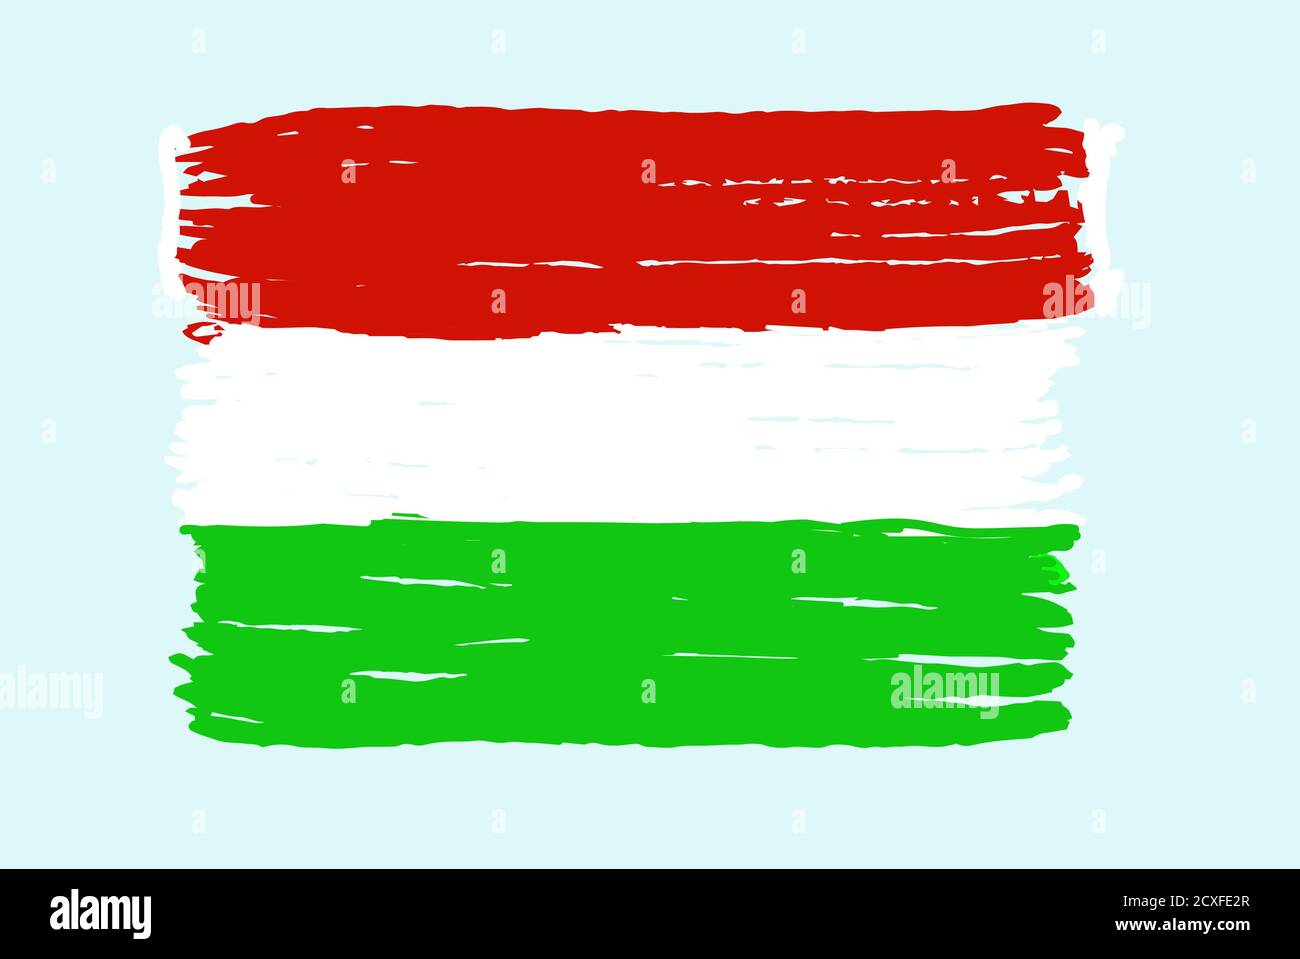 Hungary's national flag. Vector illustration Stock Vector